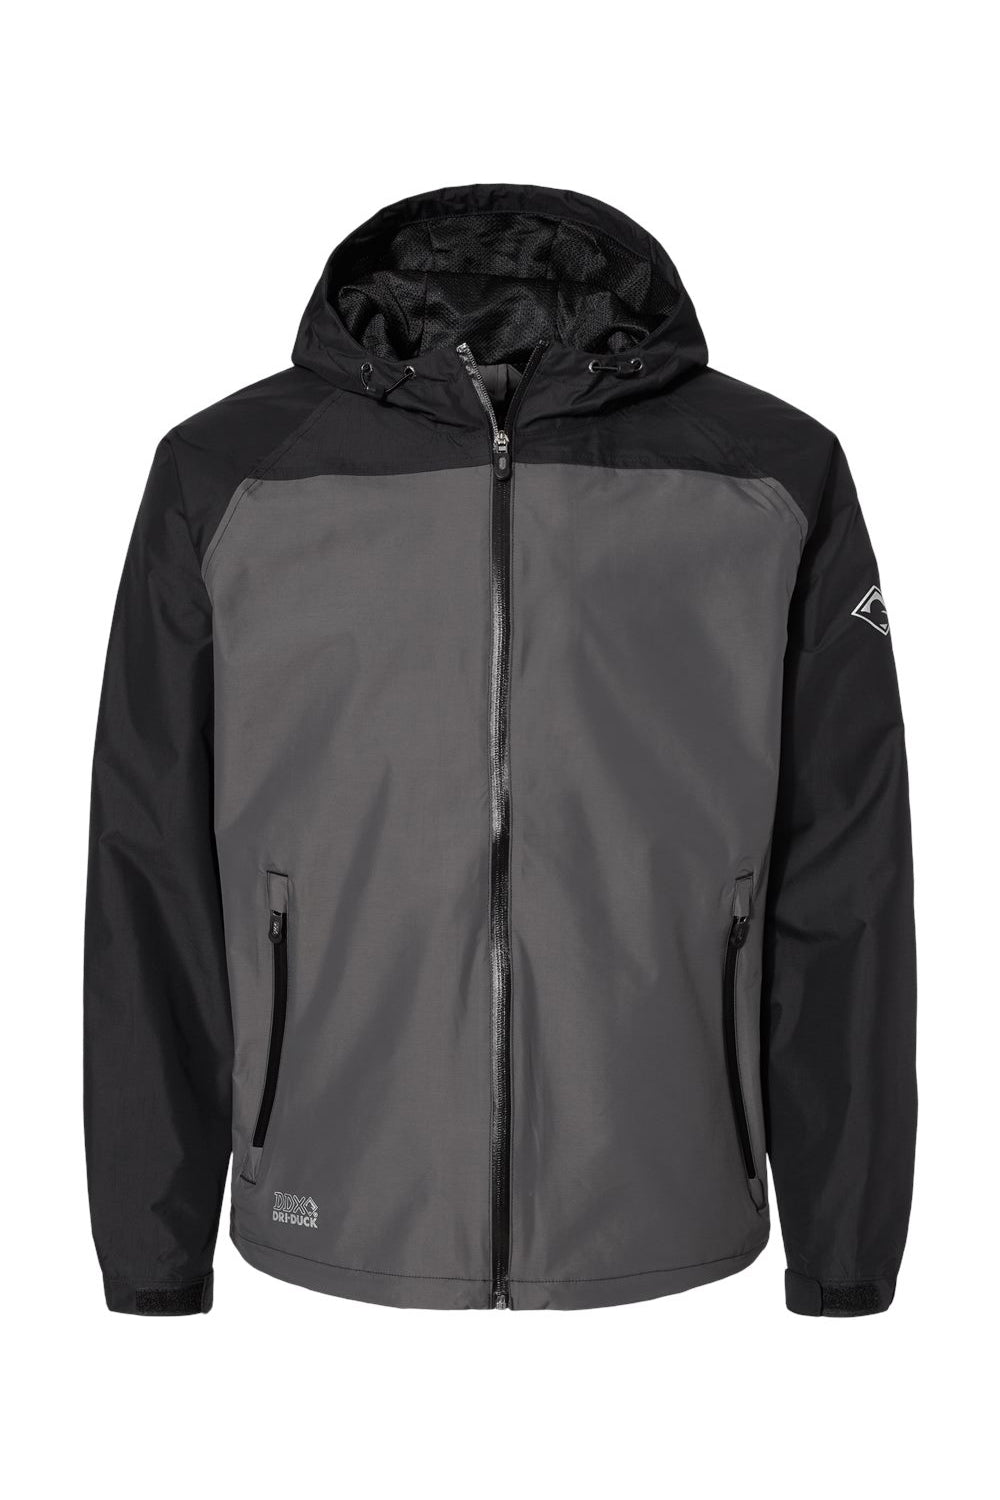 Dri Duck 5335 Mens Torrent Waterproof Full Zip Hooded Jacket Charcoal Grey/Black Flat Front